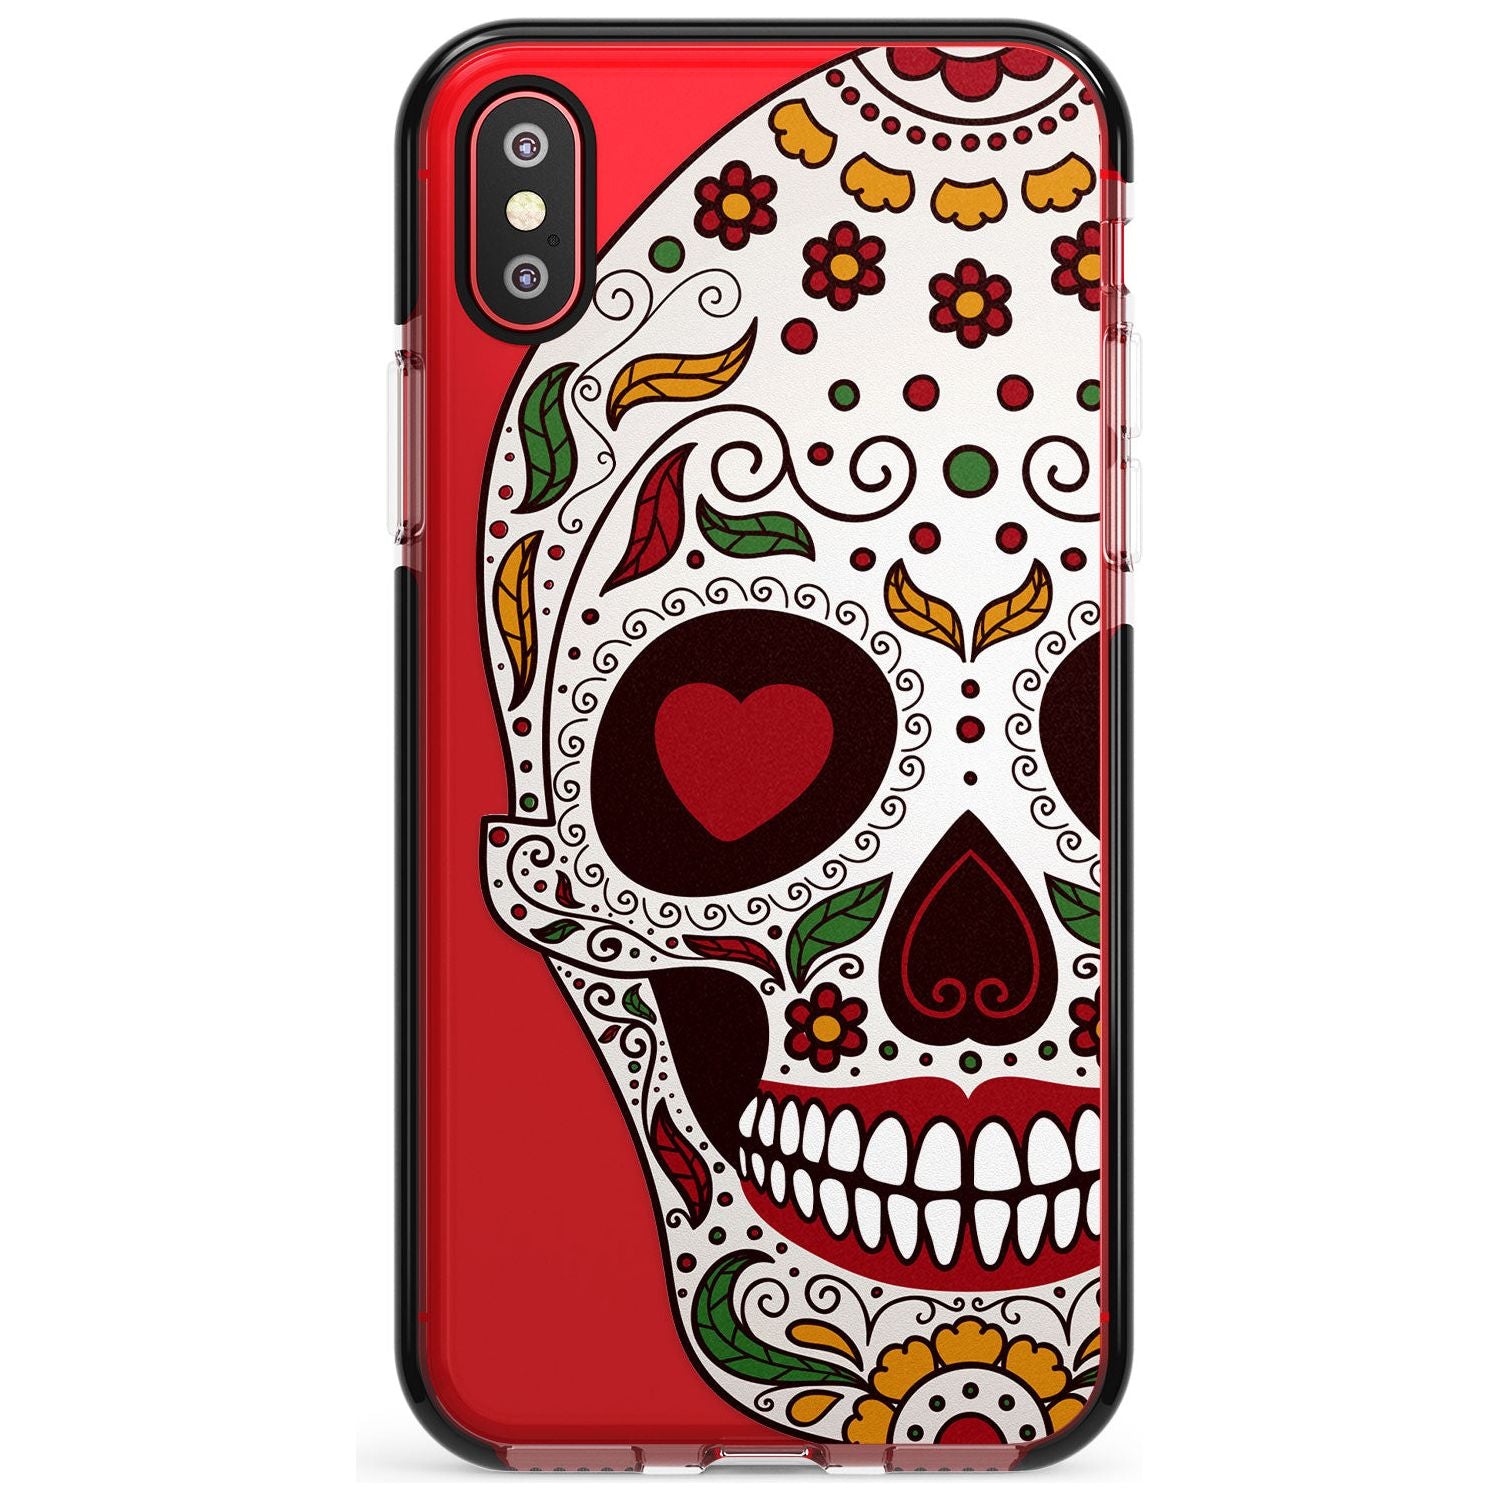 Autumn Sugar Skull Black Impact Phone Case for iPhone X XS Max XR